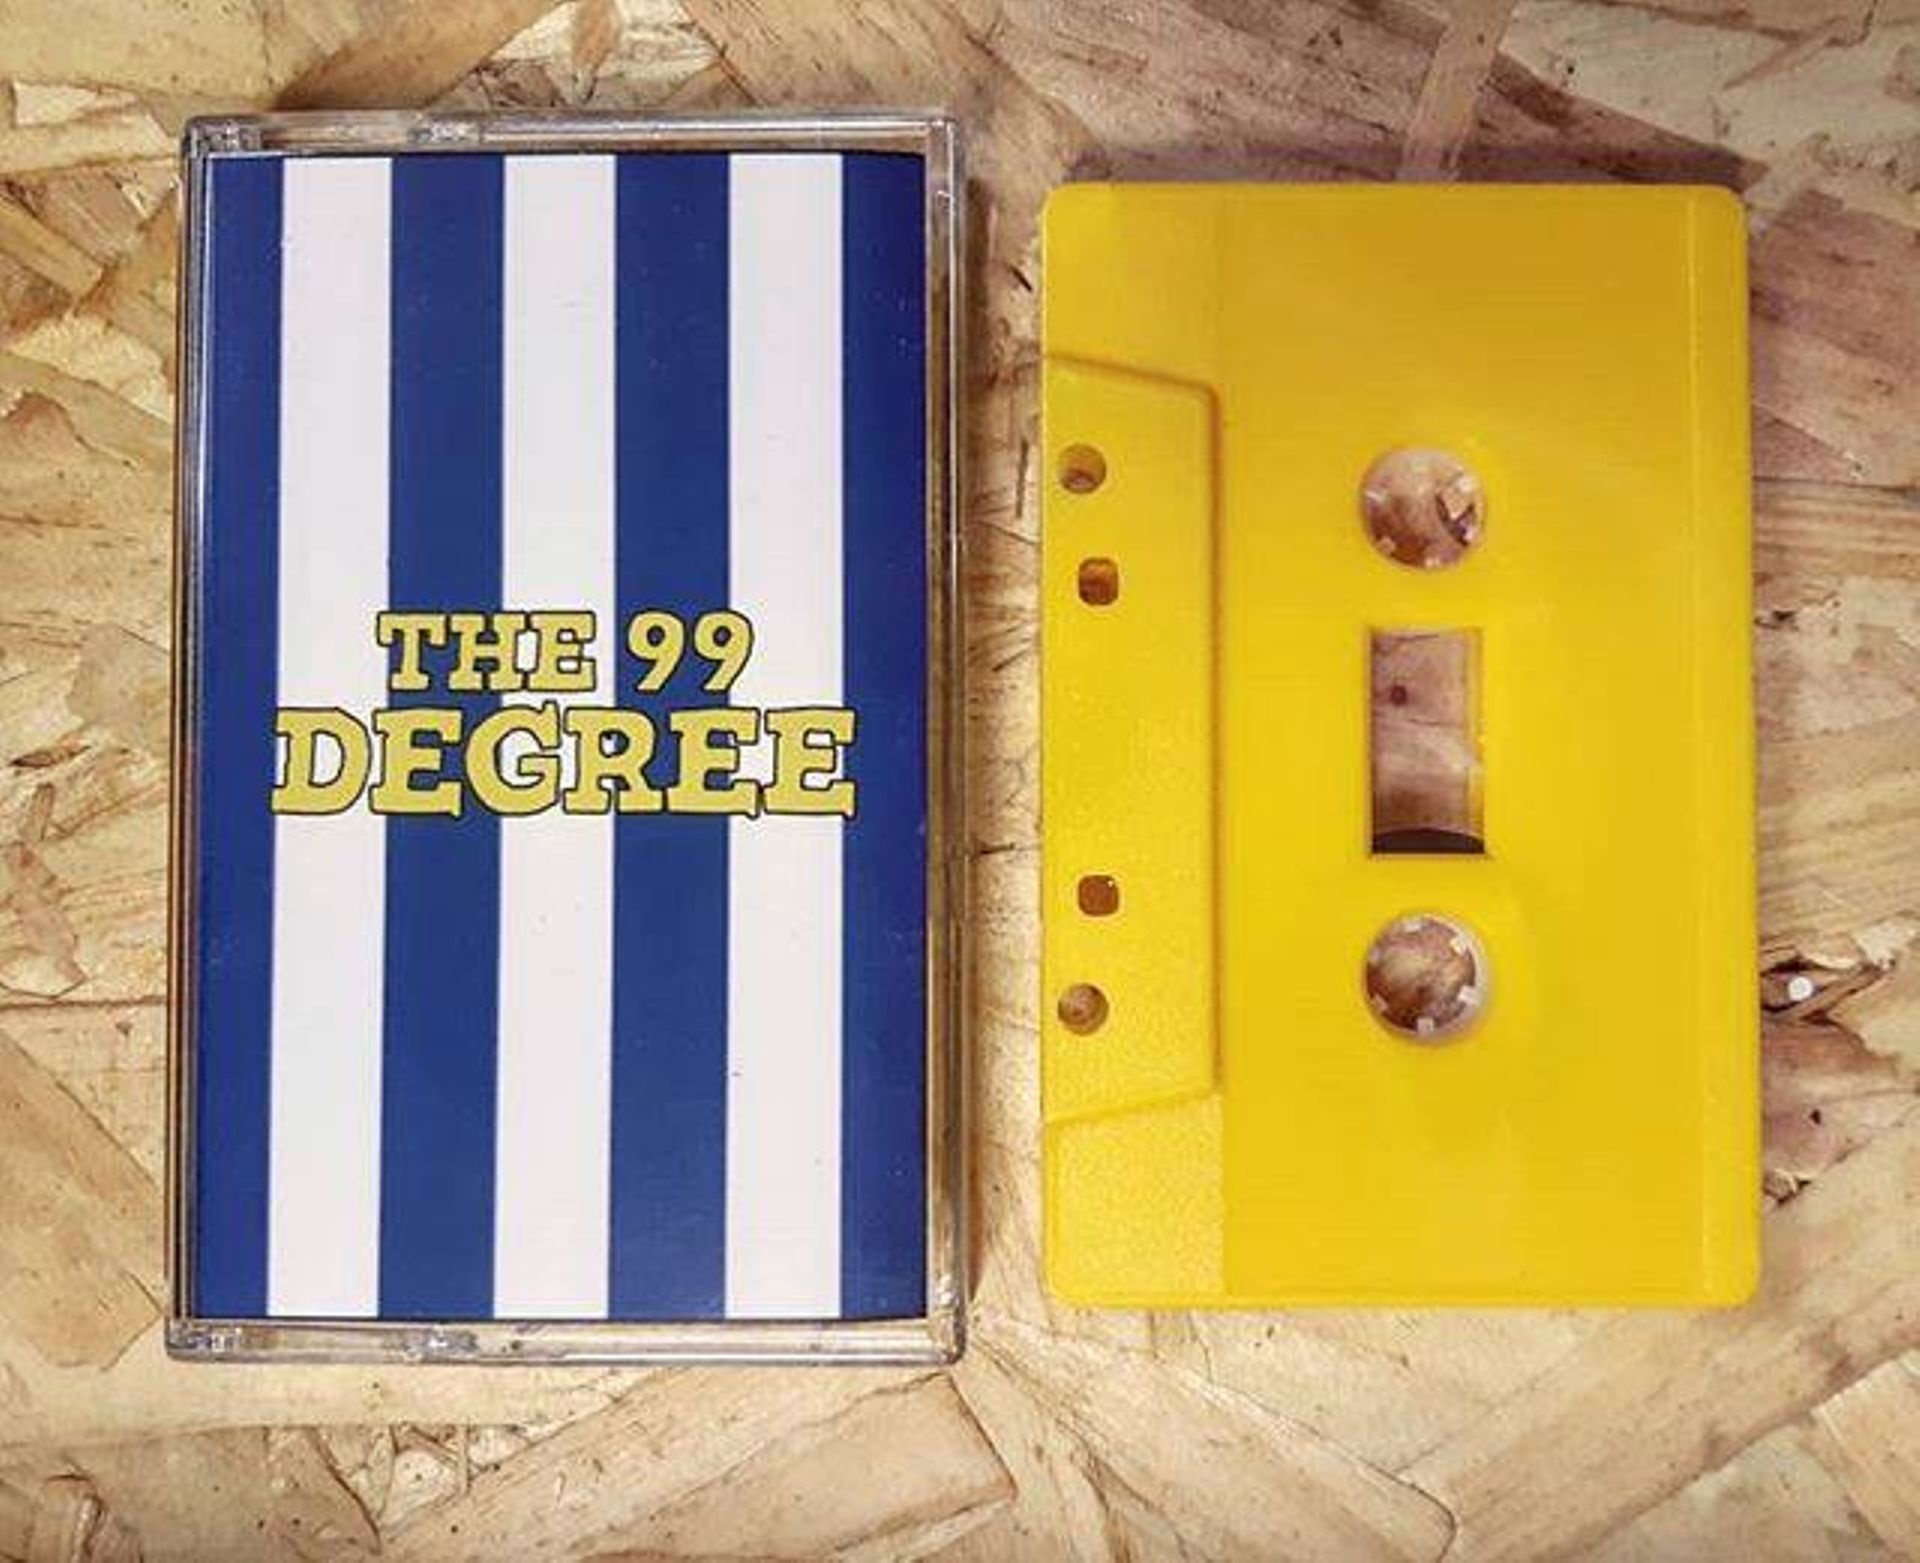 Cassette de "The 99 Degree".